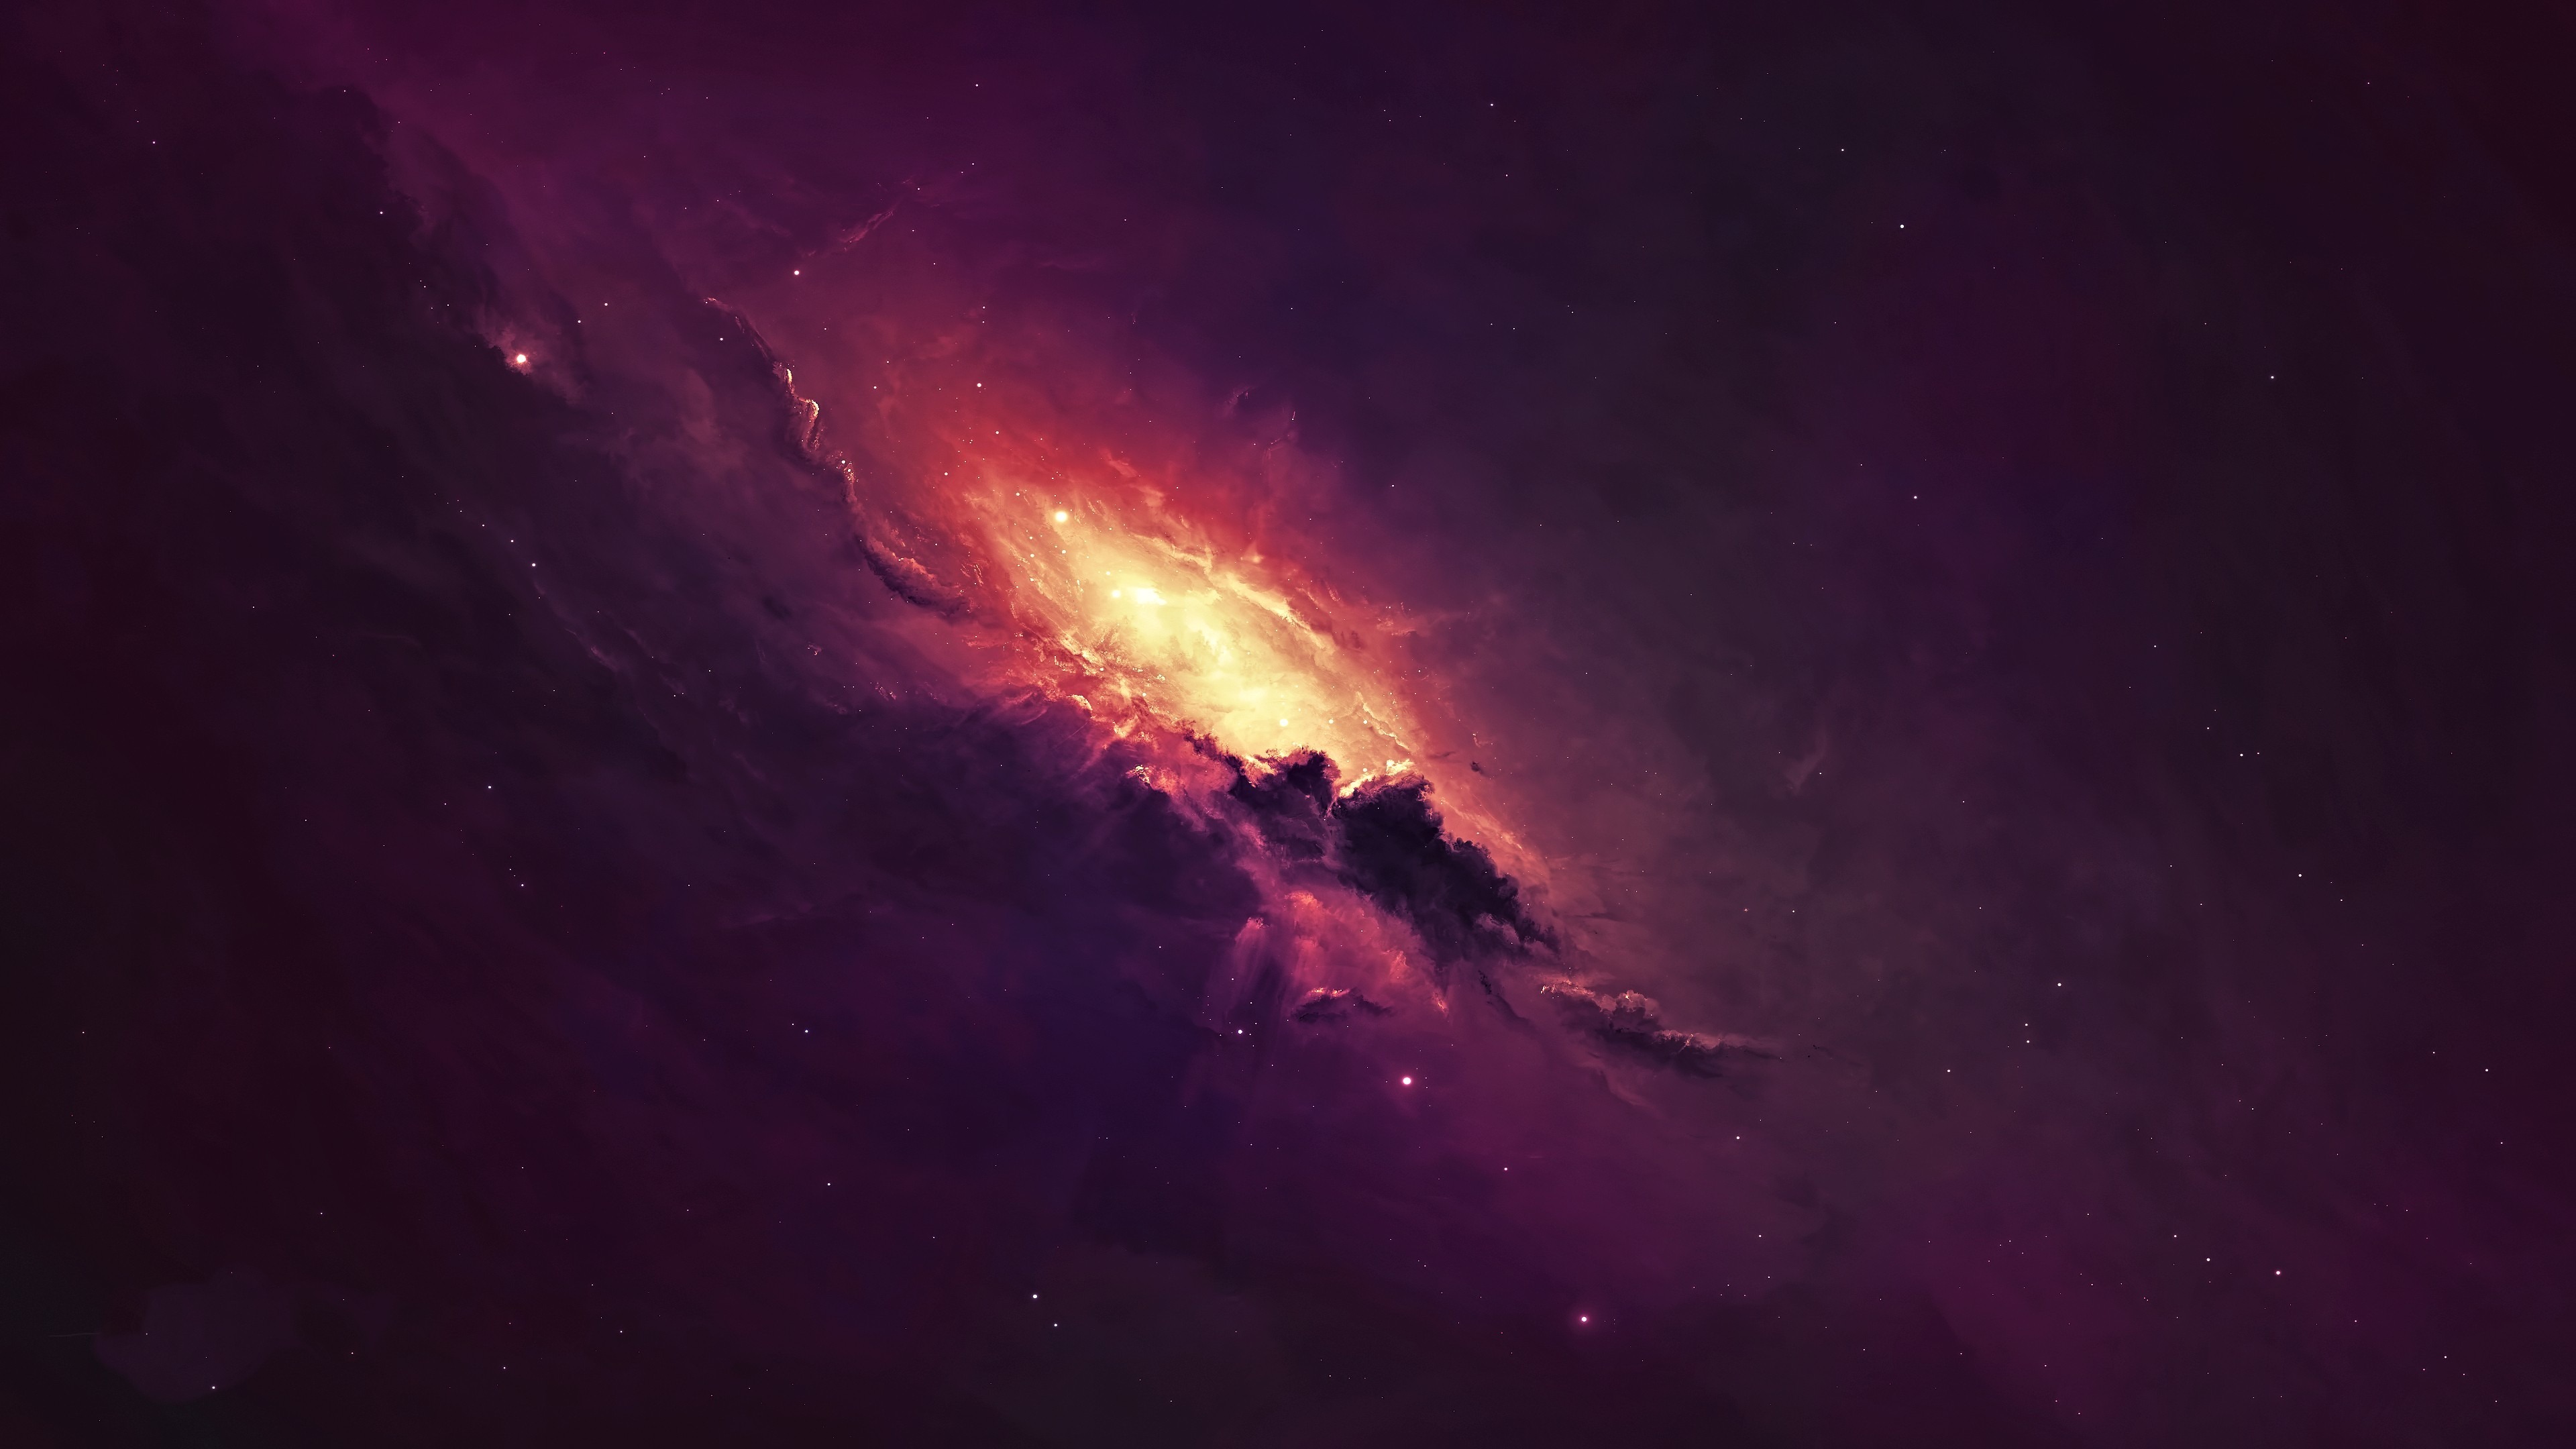 Download 3840x2400 Space Nebula Dark Clouds 4k Wallpaper 4k Ultra